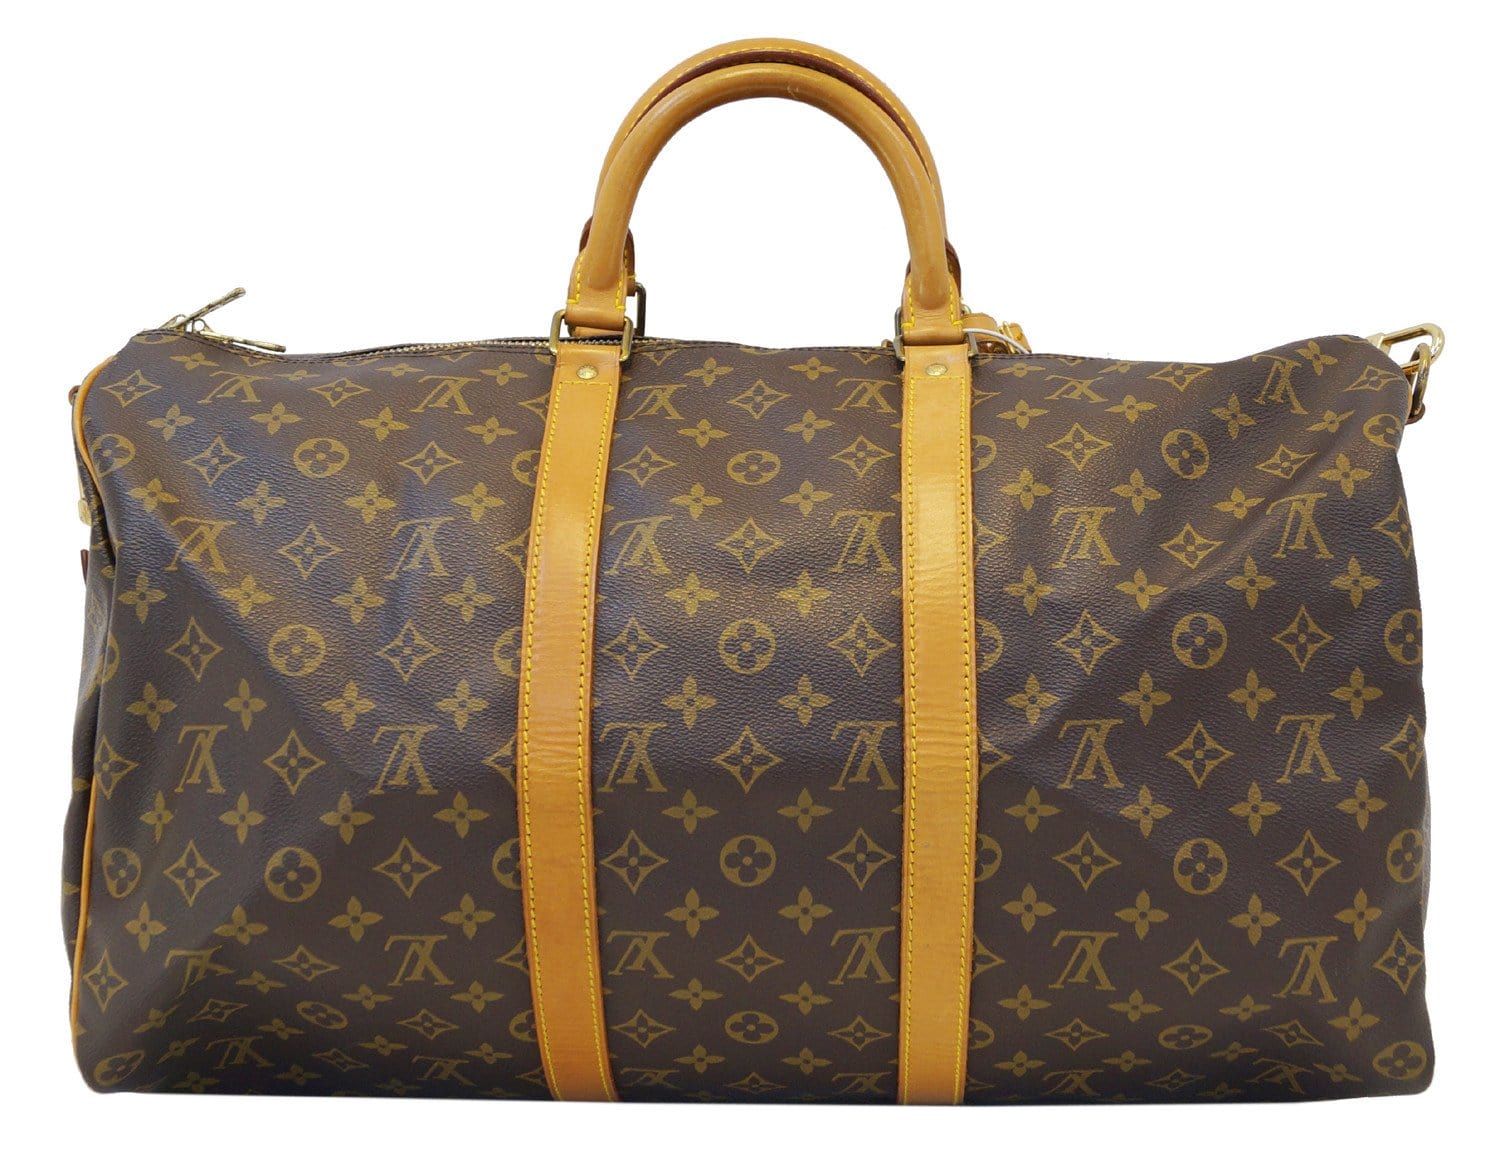 Authentic Louis Vuitton Monogram Keepall Bandouliere 50 Handbag for Women.